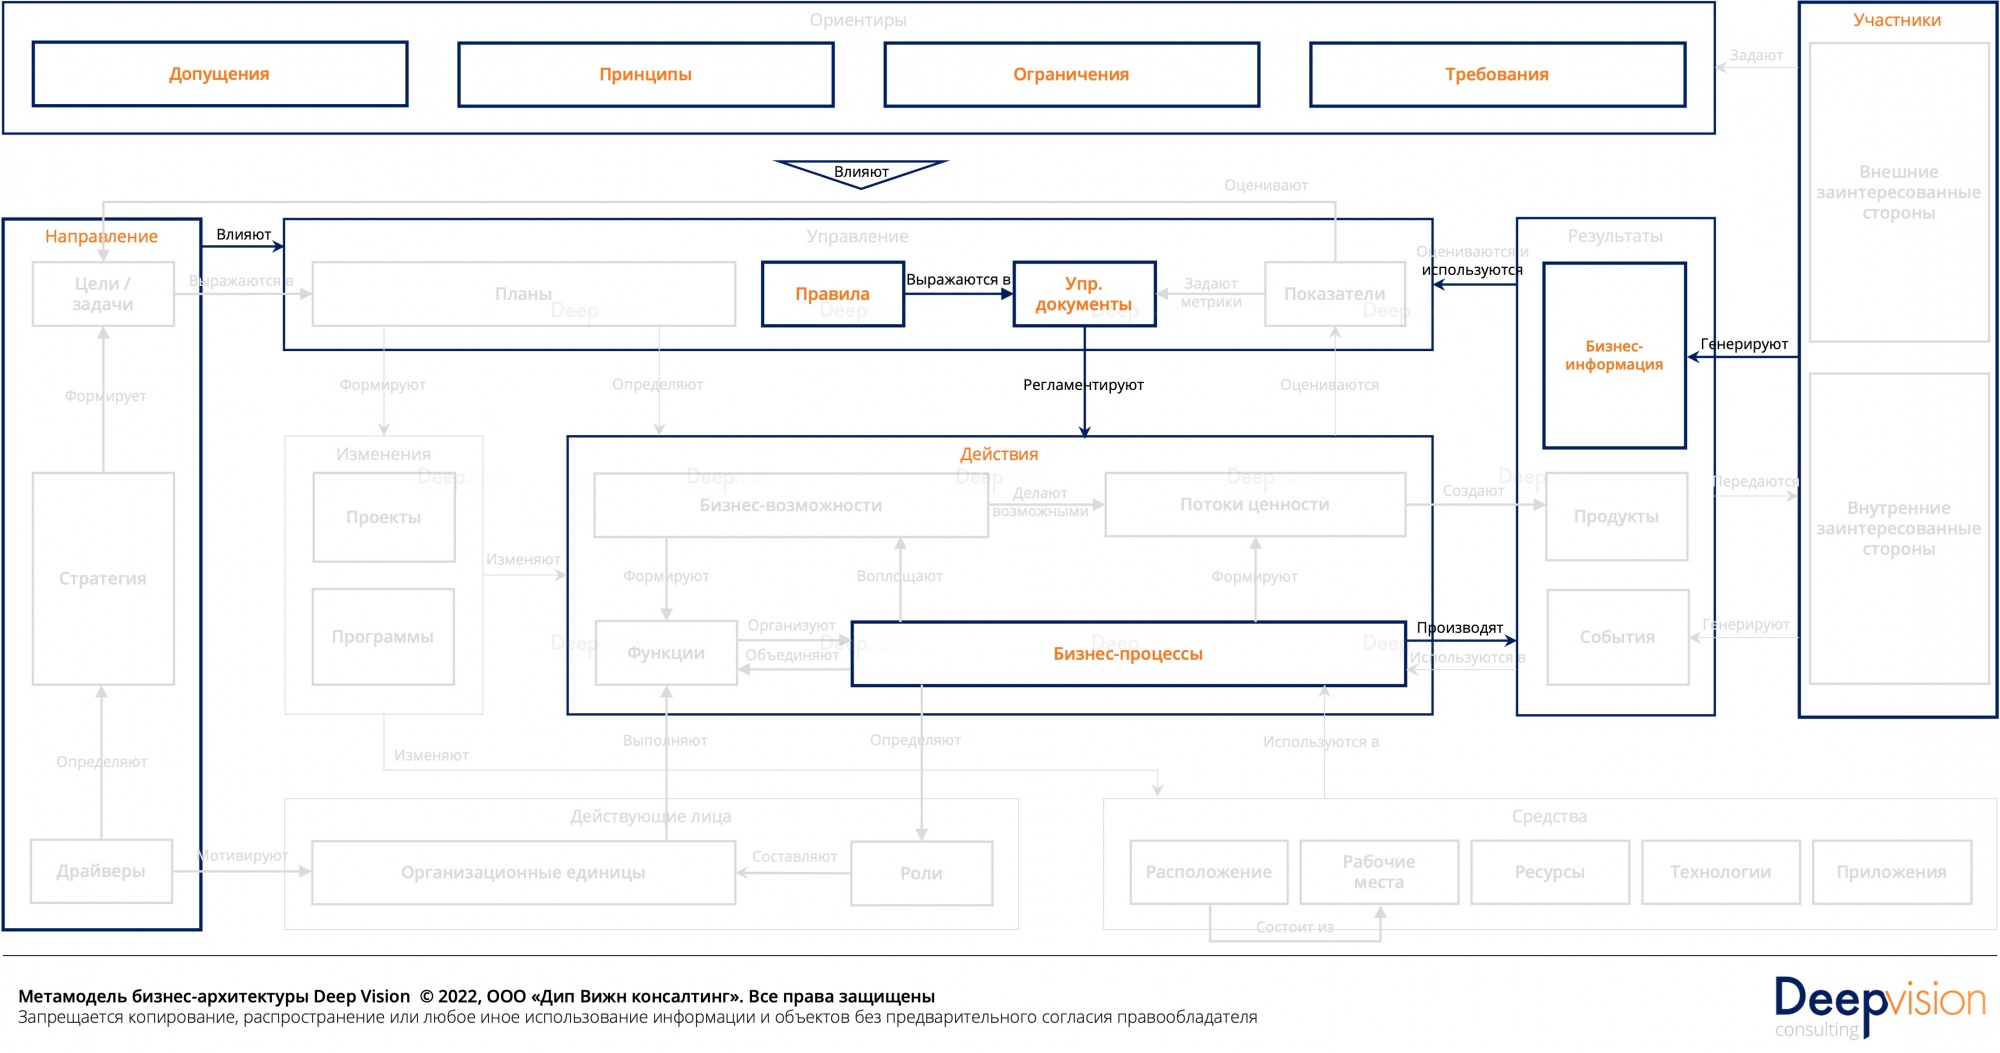 Метамодель бизнес-архитектуры - контур управления.jpg